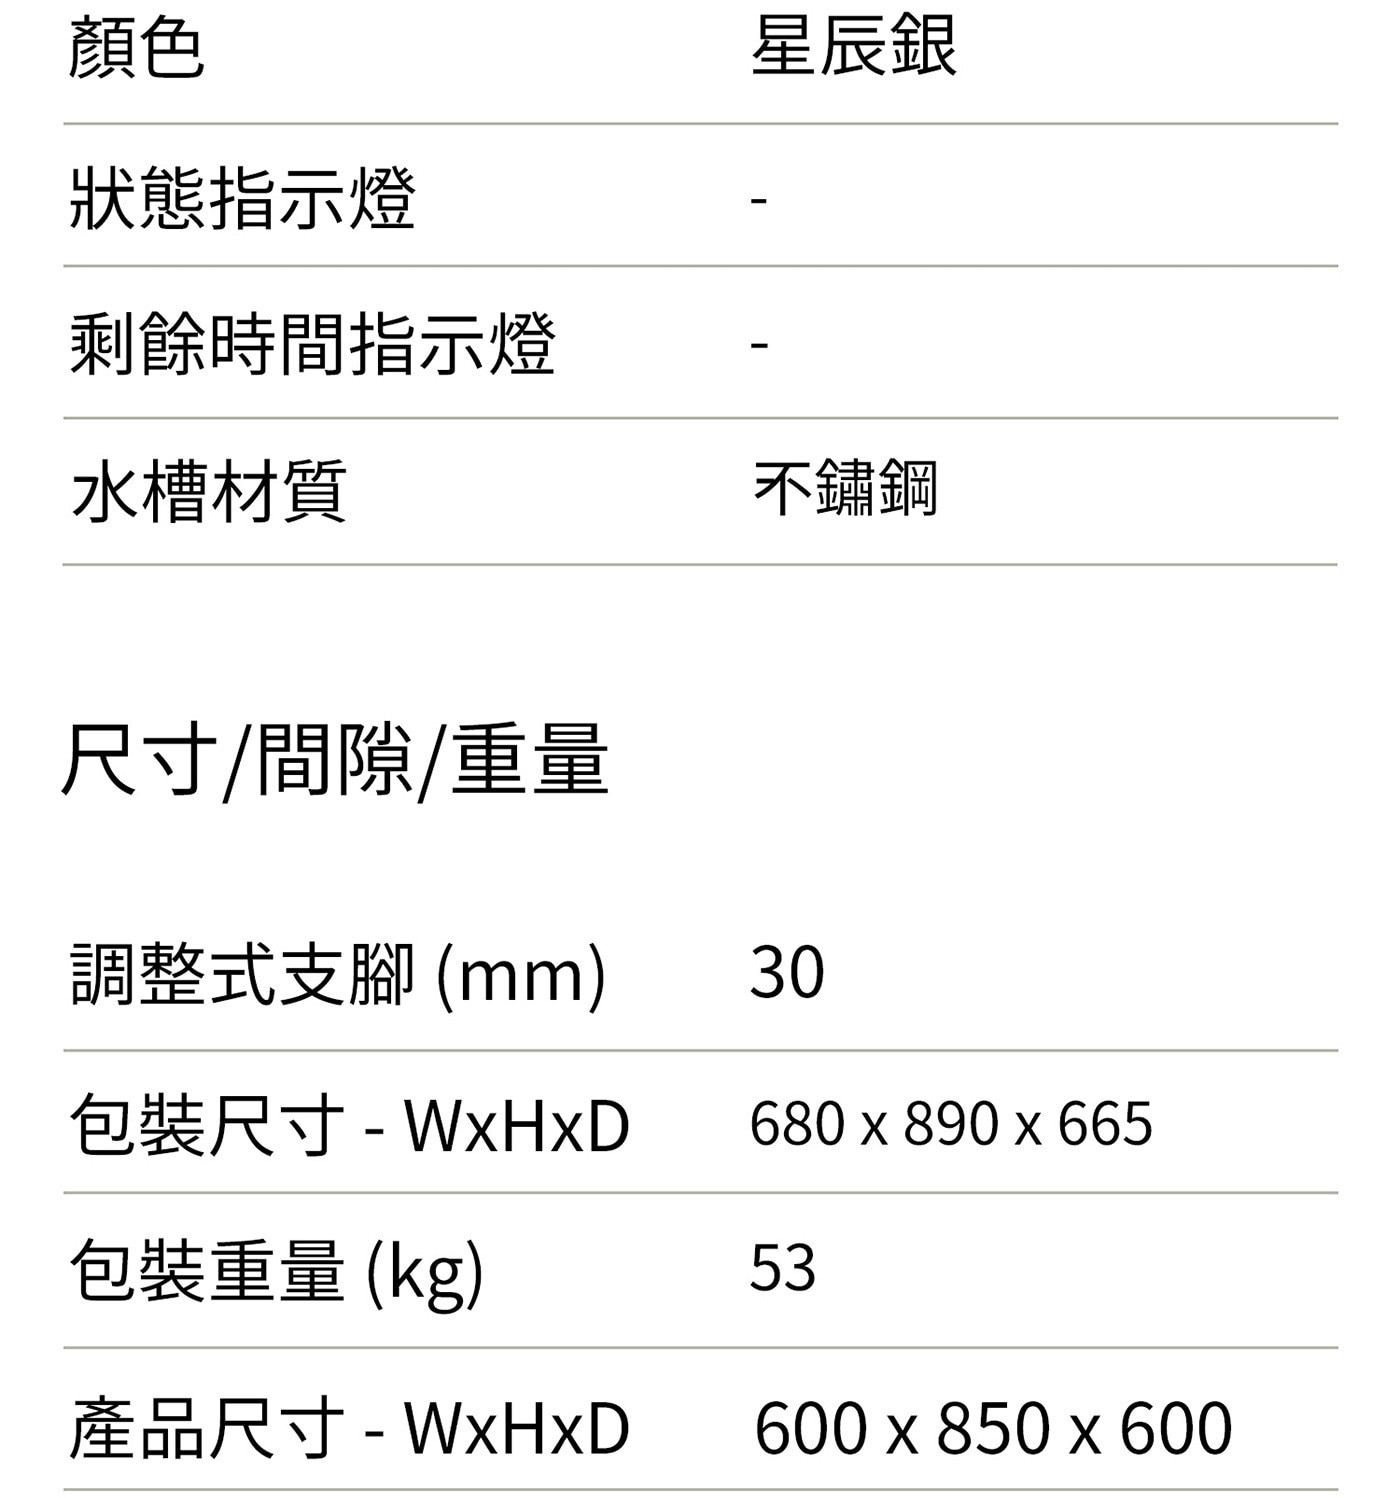 LG 60公分 蒸氣洗碗機 DFB435FP